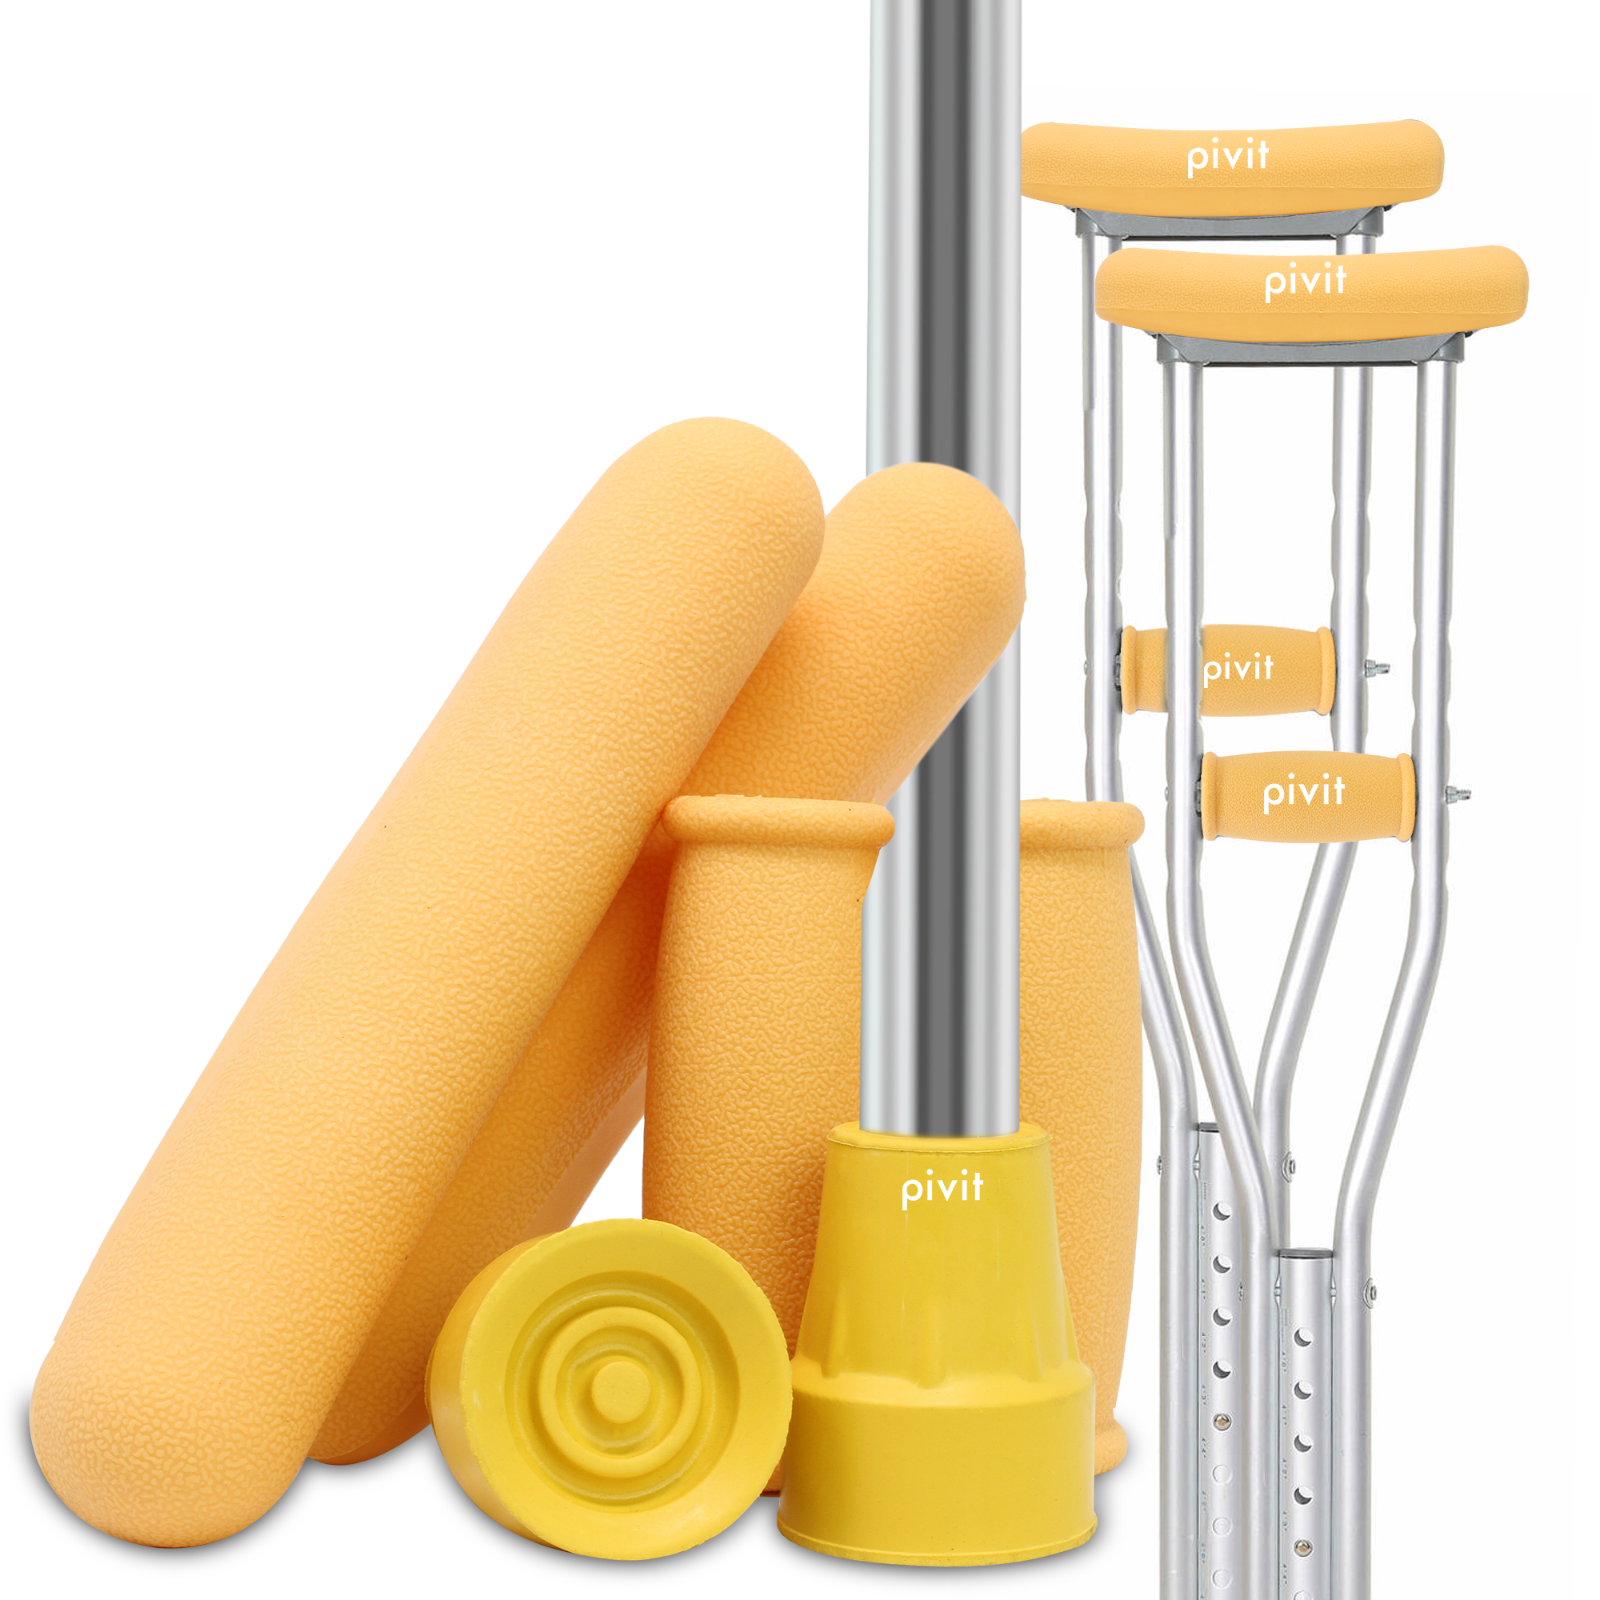 Crutch Accessory Kit Replacement Parts Set 6 PCS Fits Standard Aluminum Crutches